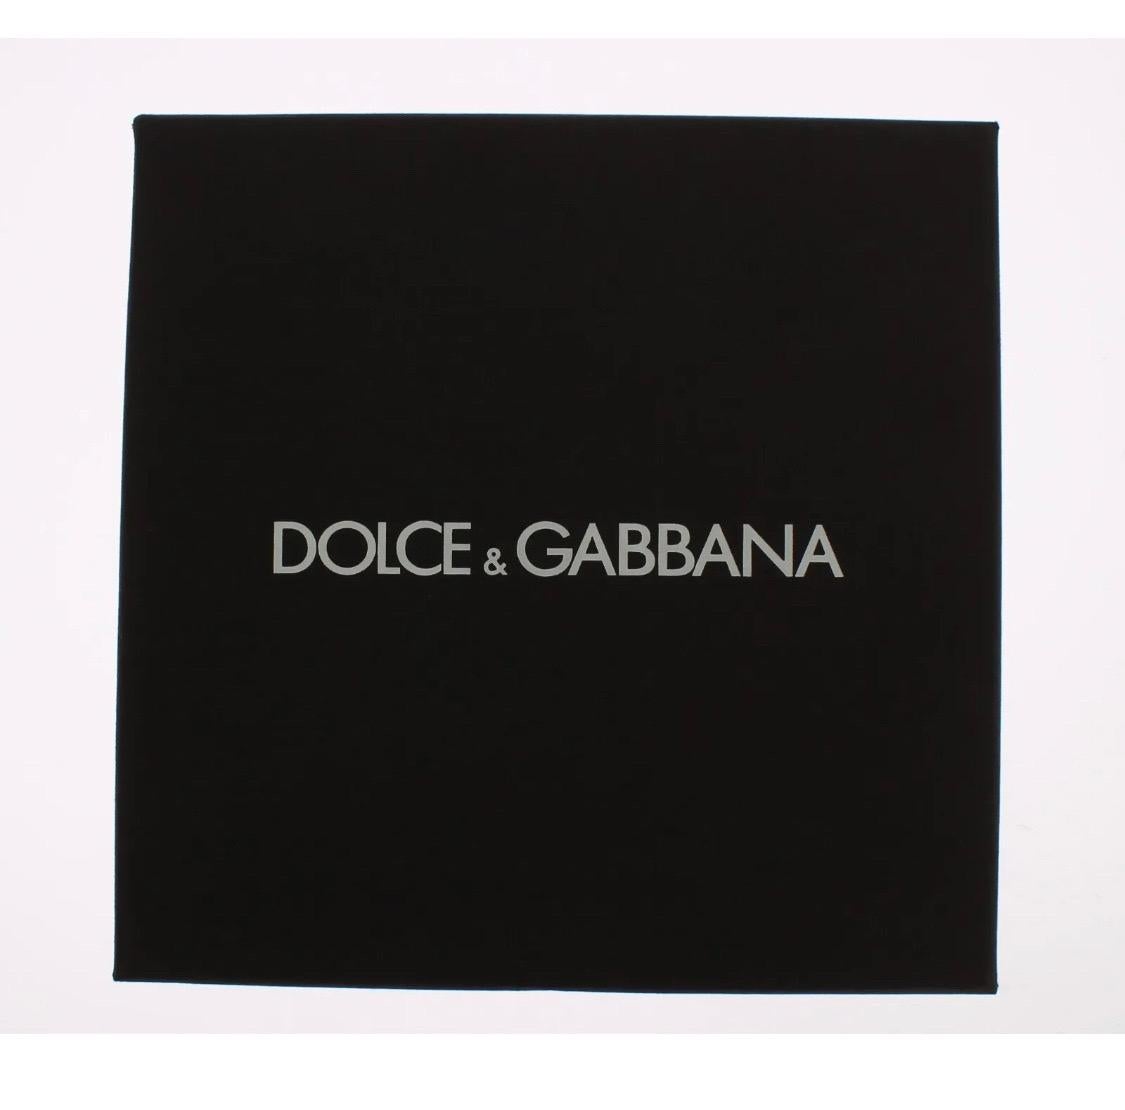 Dolce & Gabbana golden tiara with an openwork pattern 2